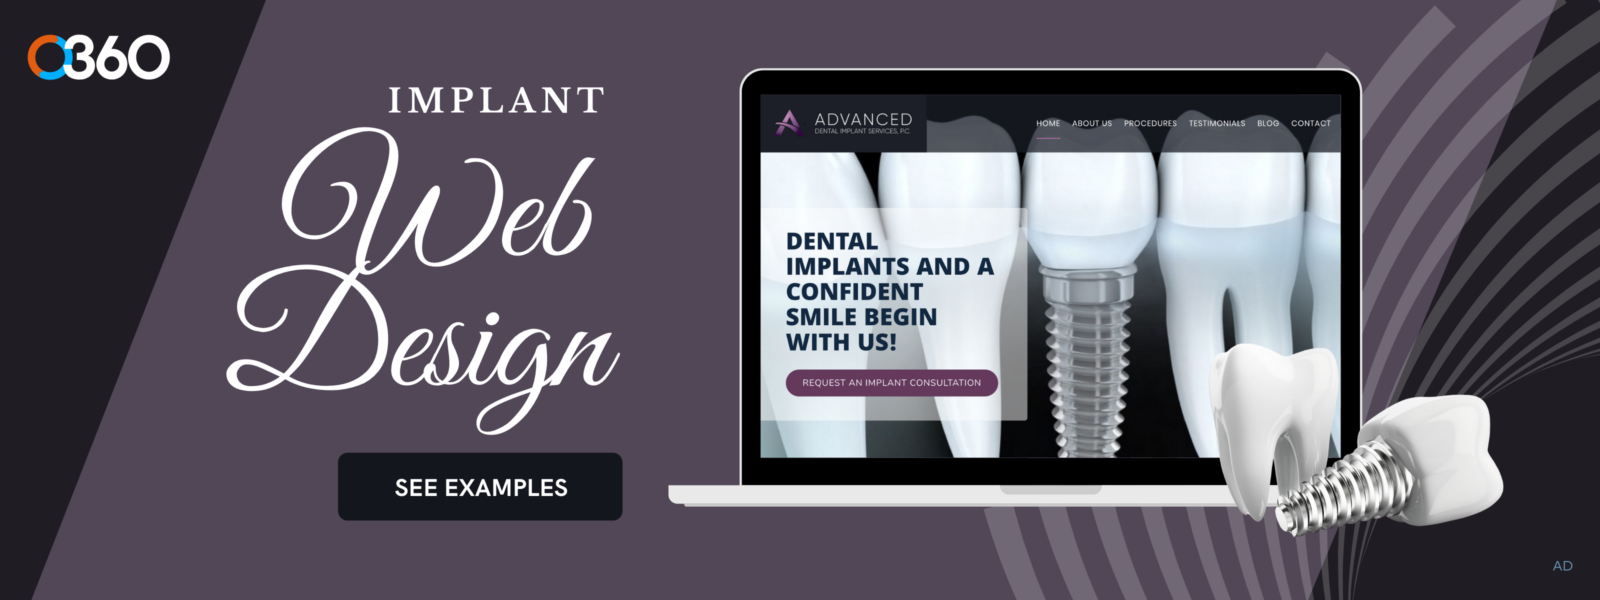 O360 ad - dental implant web design